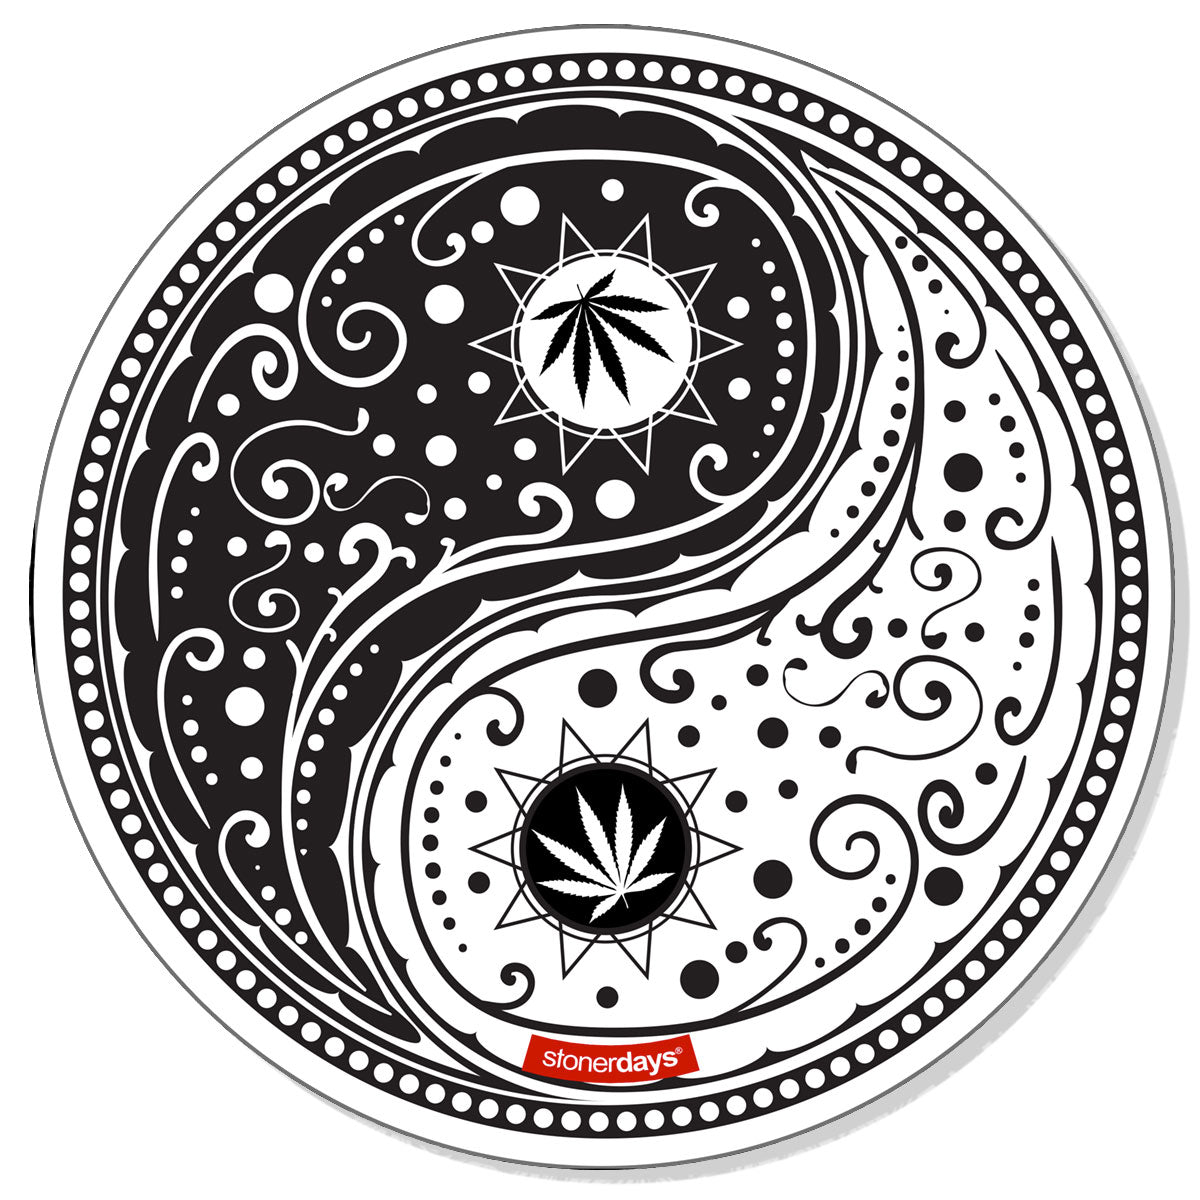 StonerDays Yin Yang Creativity Mat, 8" Diameter, Black & White Design with Cannabis Leaf Motif